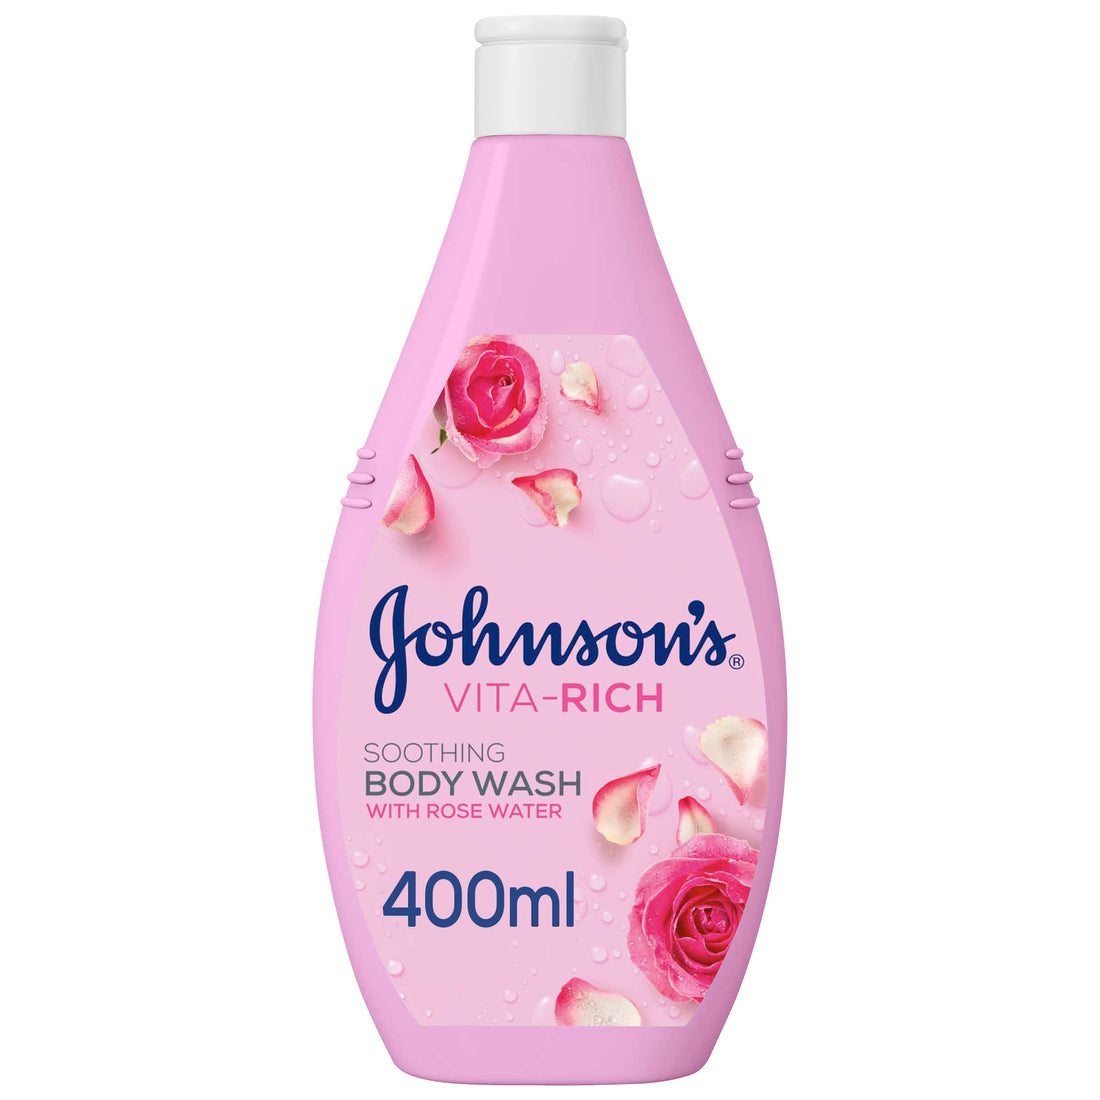 JOHNSON’S Body Wash - Vita-Rich, Soothing Rose Water, 400ml